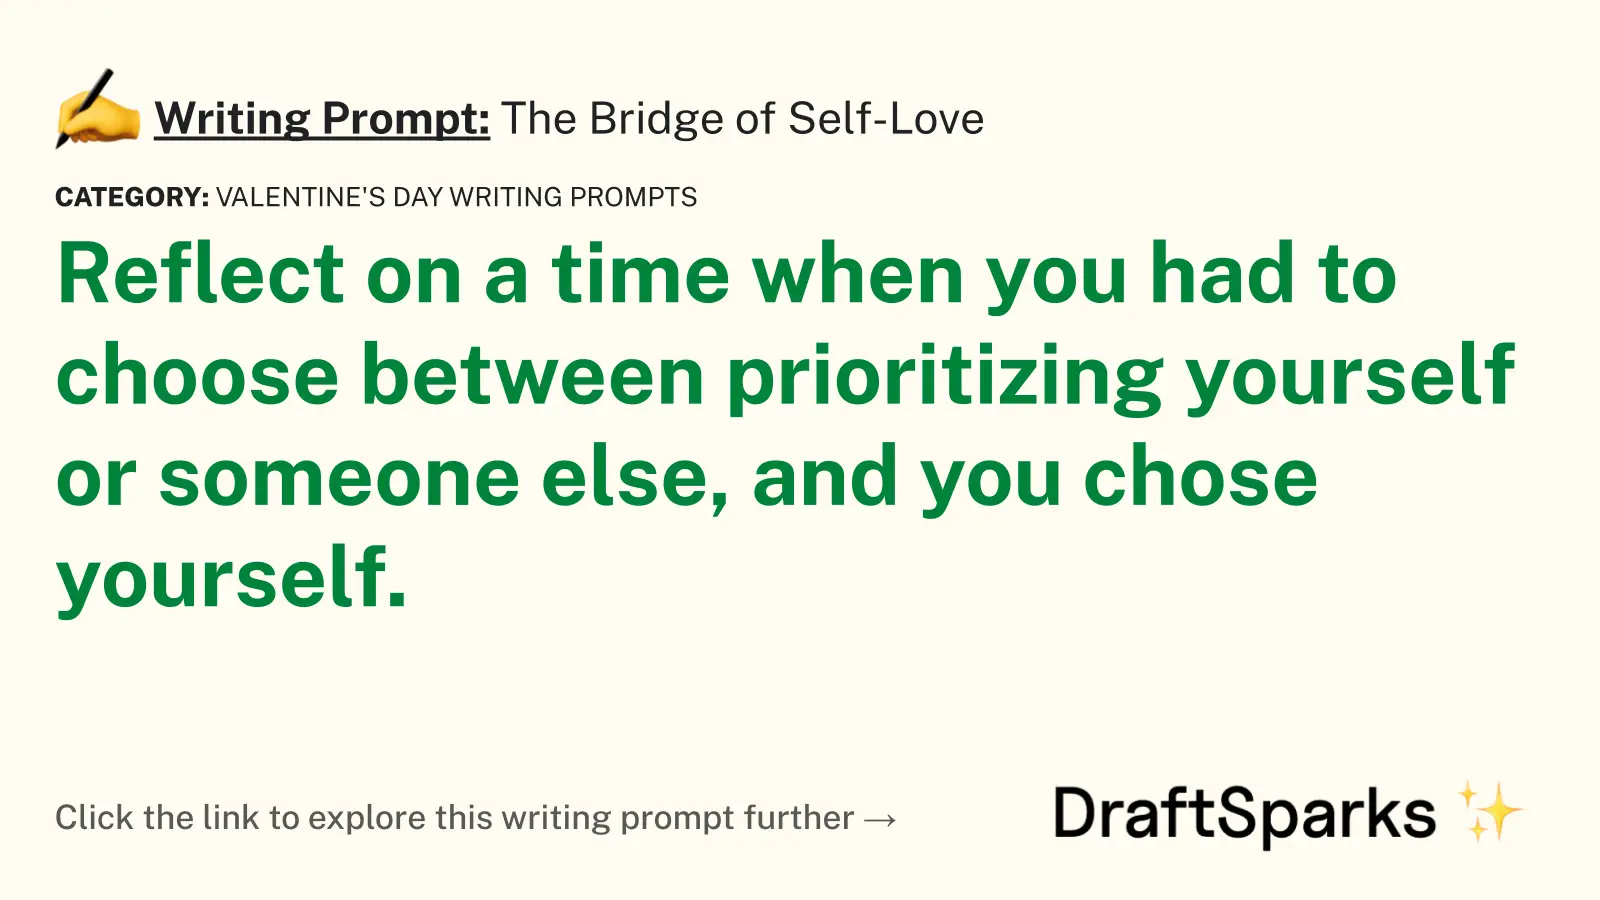 The Bridge of Self-Love